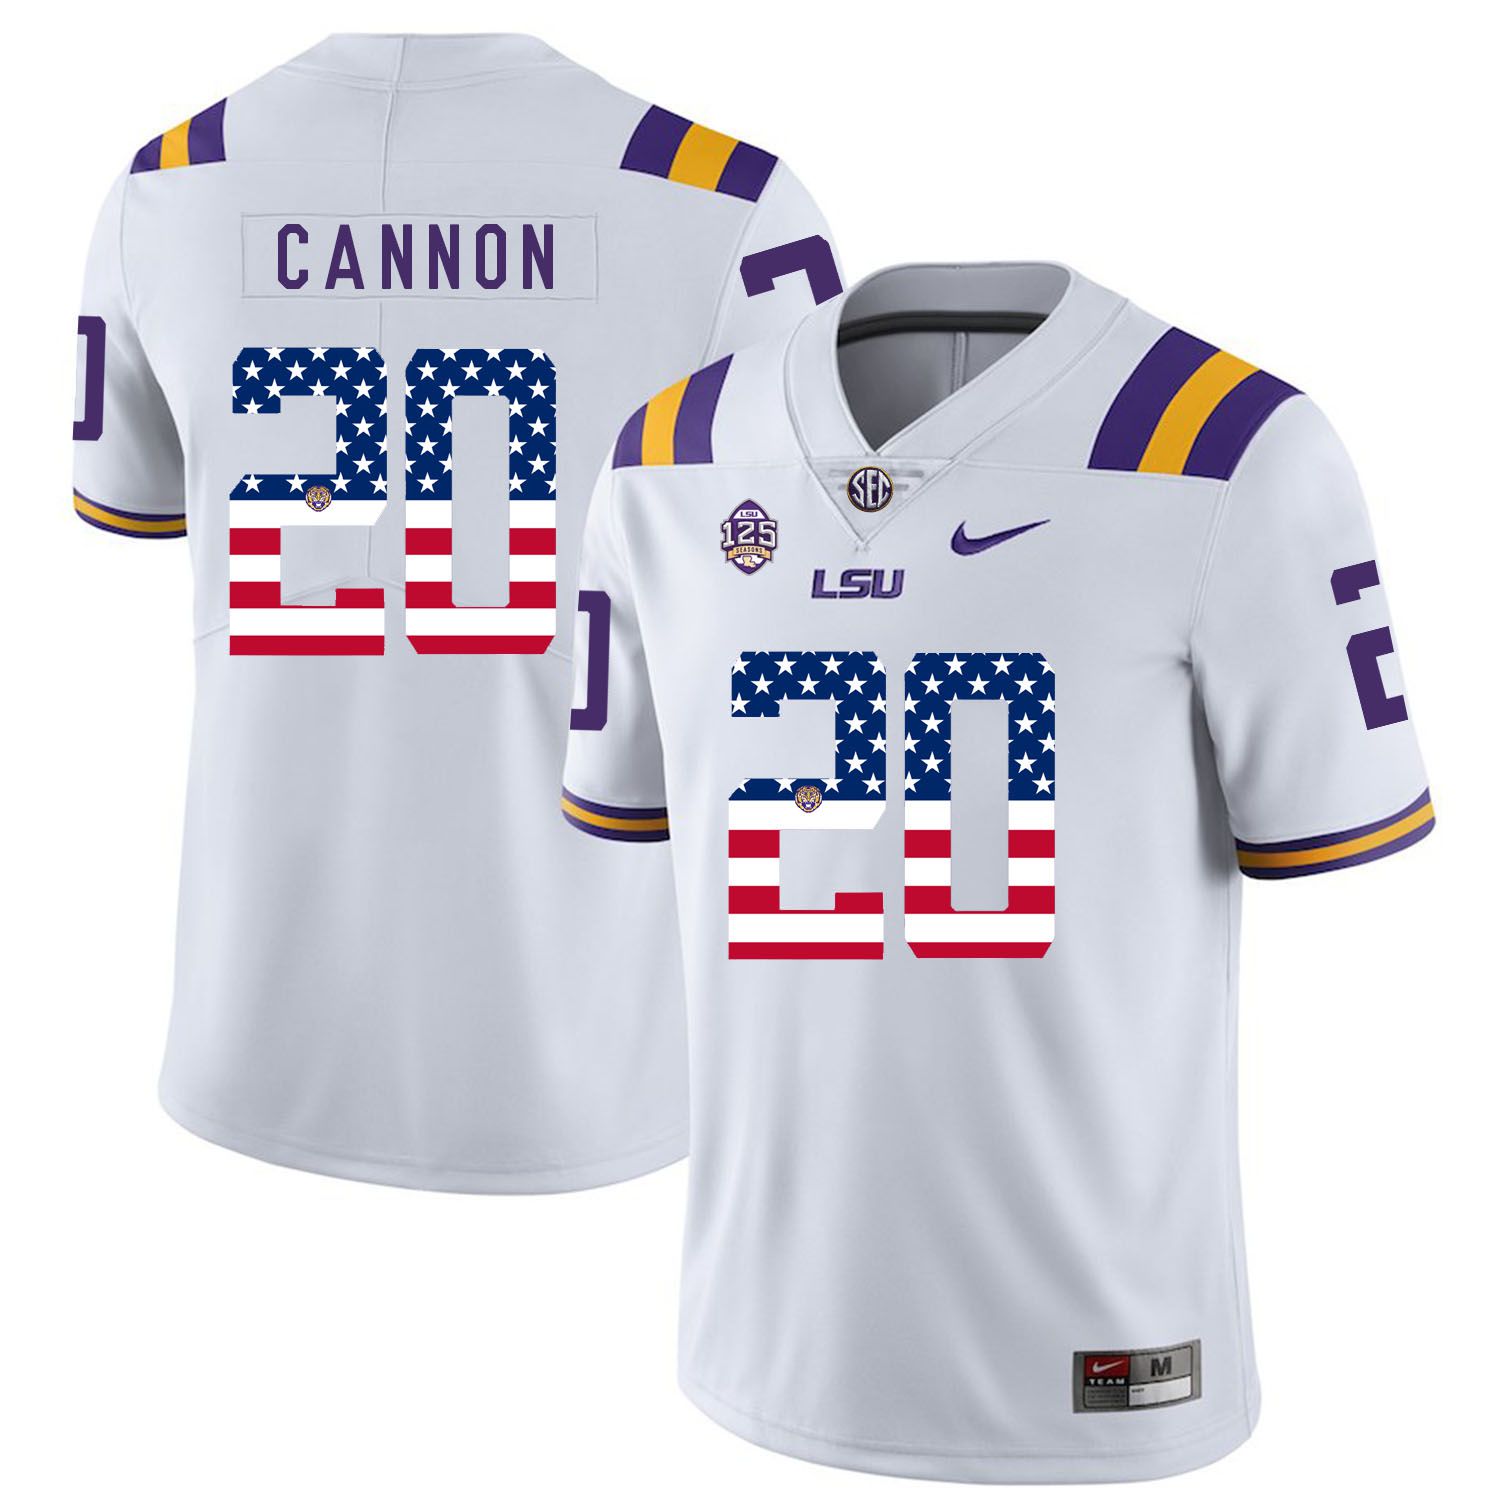 Men LSU Tigers 20 Cannon White Flag Customized NCAA Jerseys